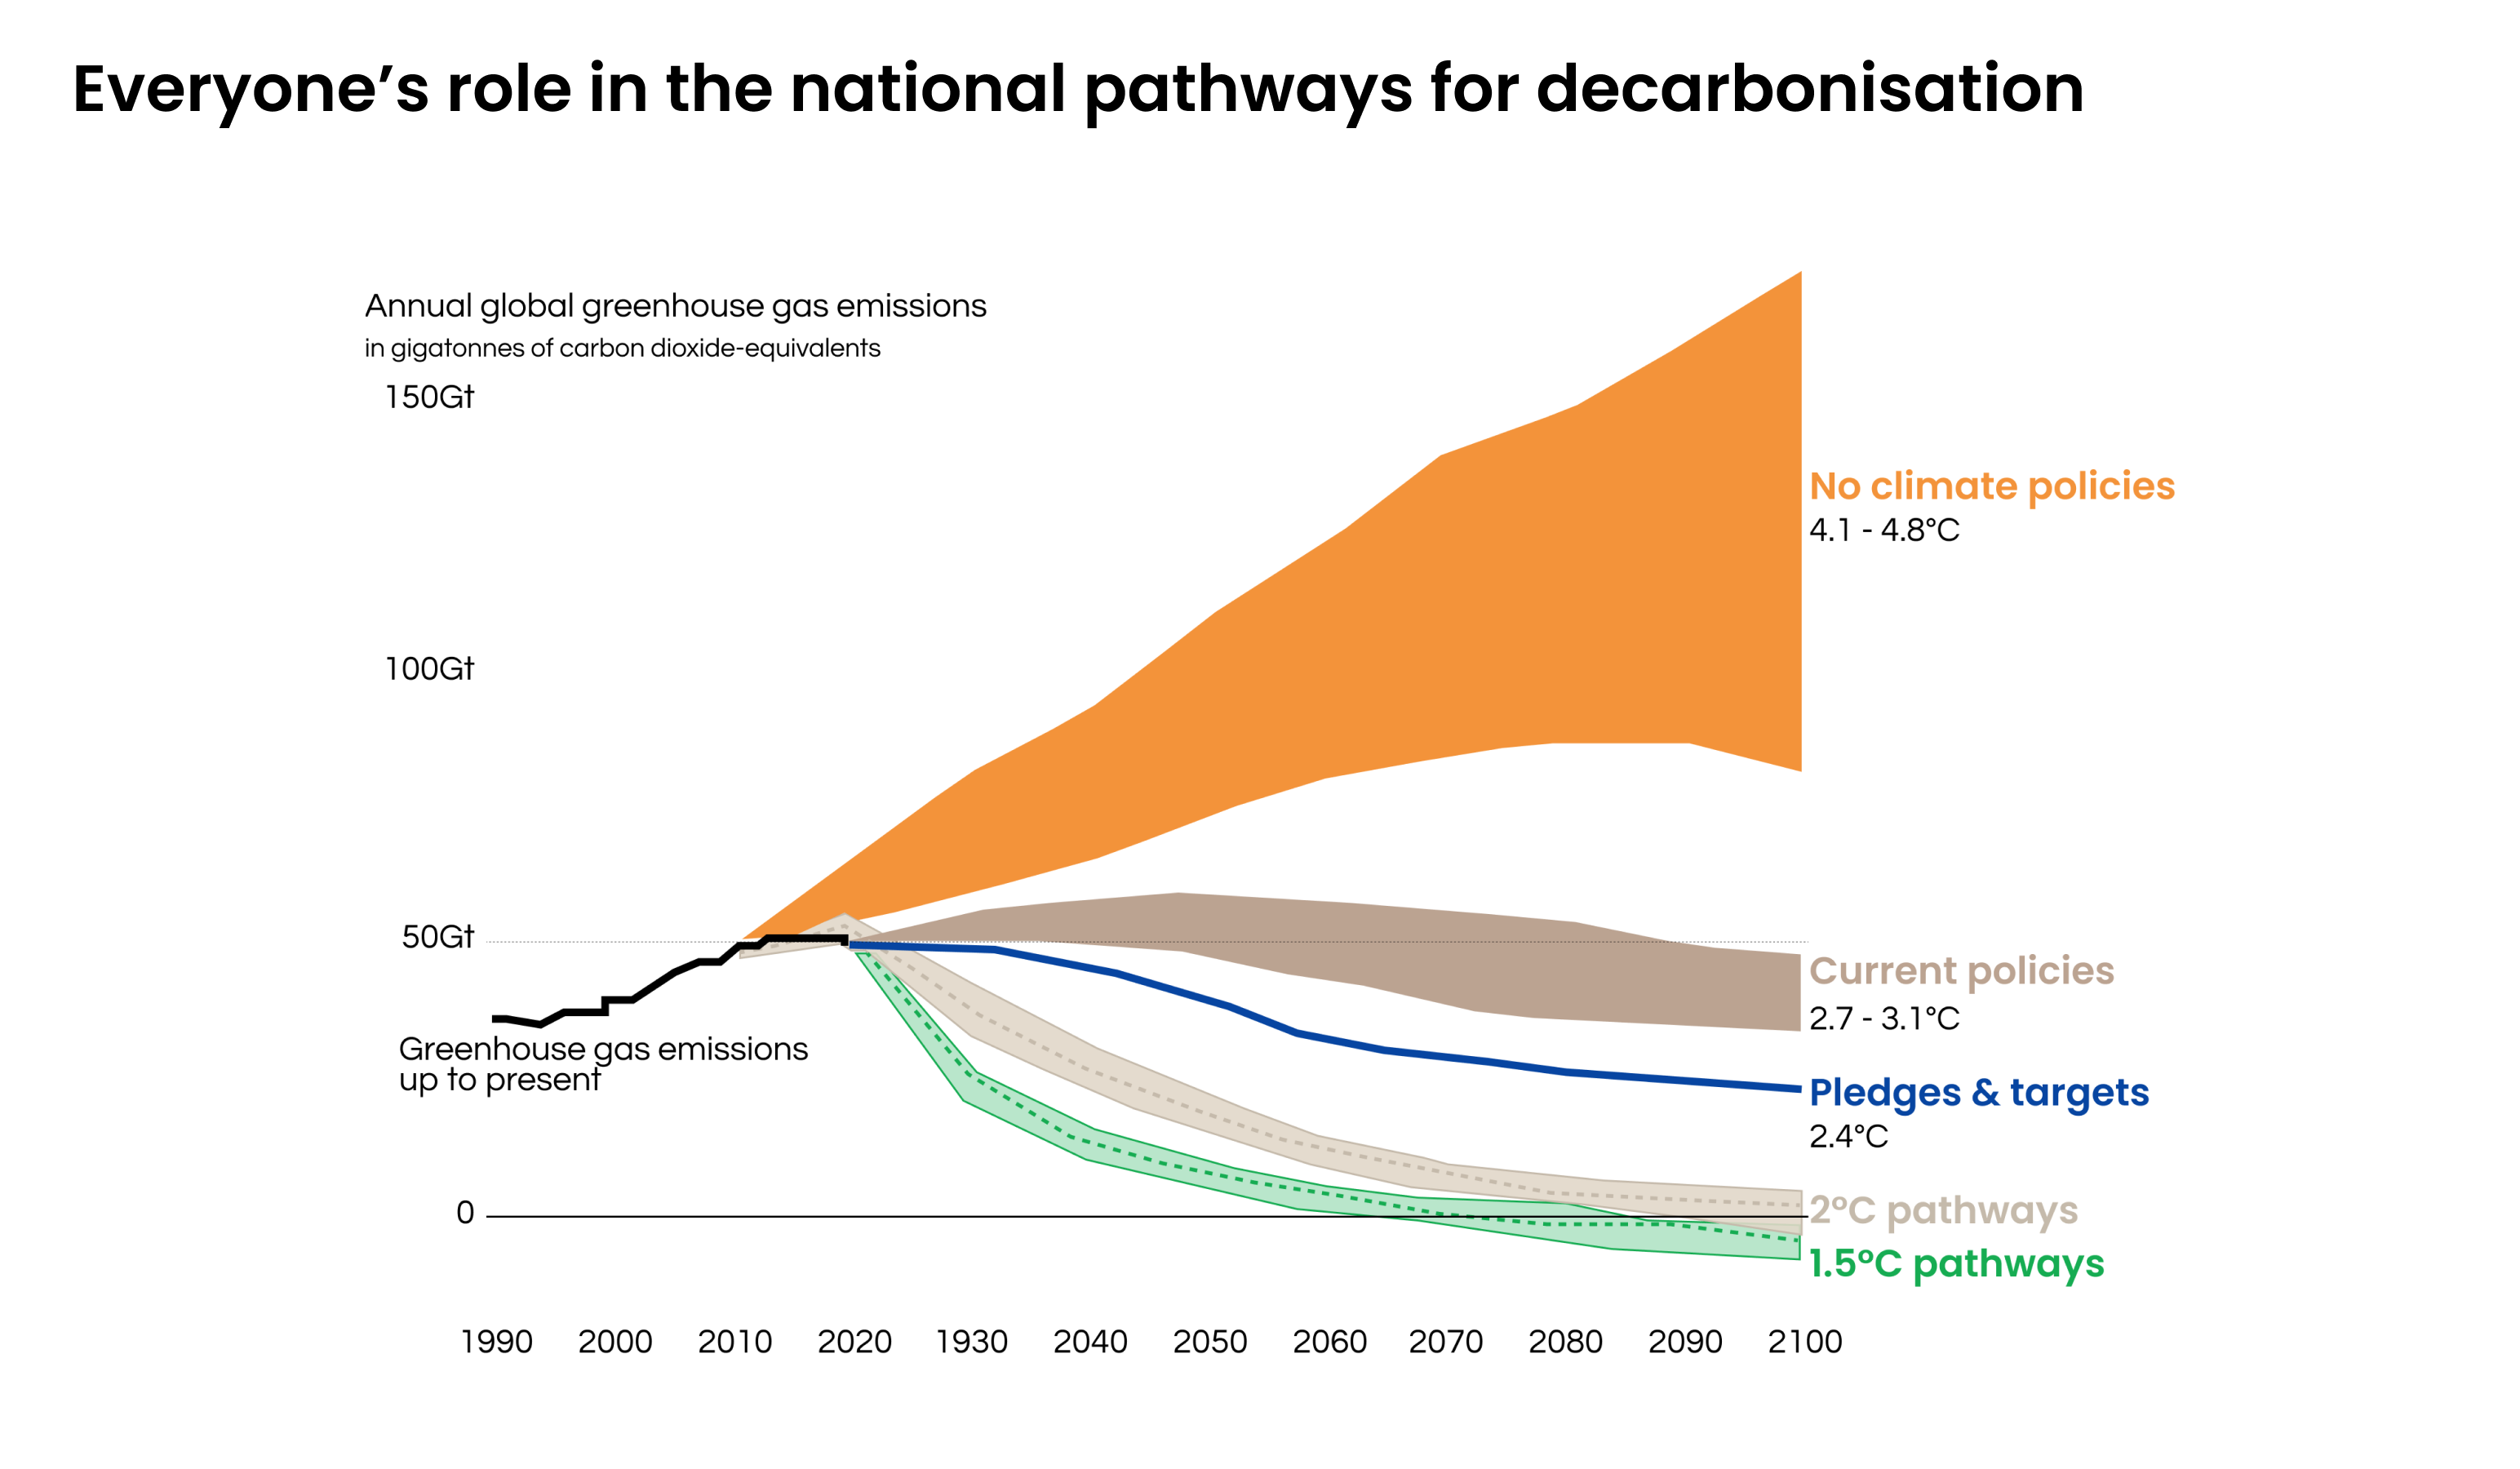 Figure 2. Decarbonisation pathways